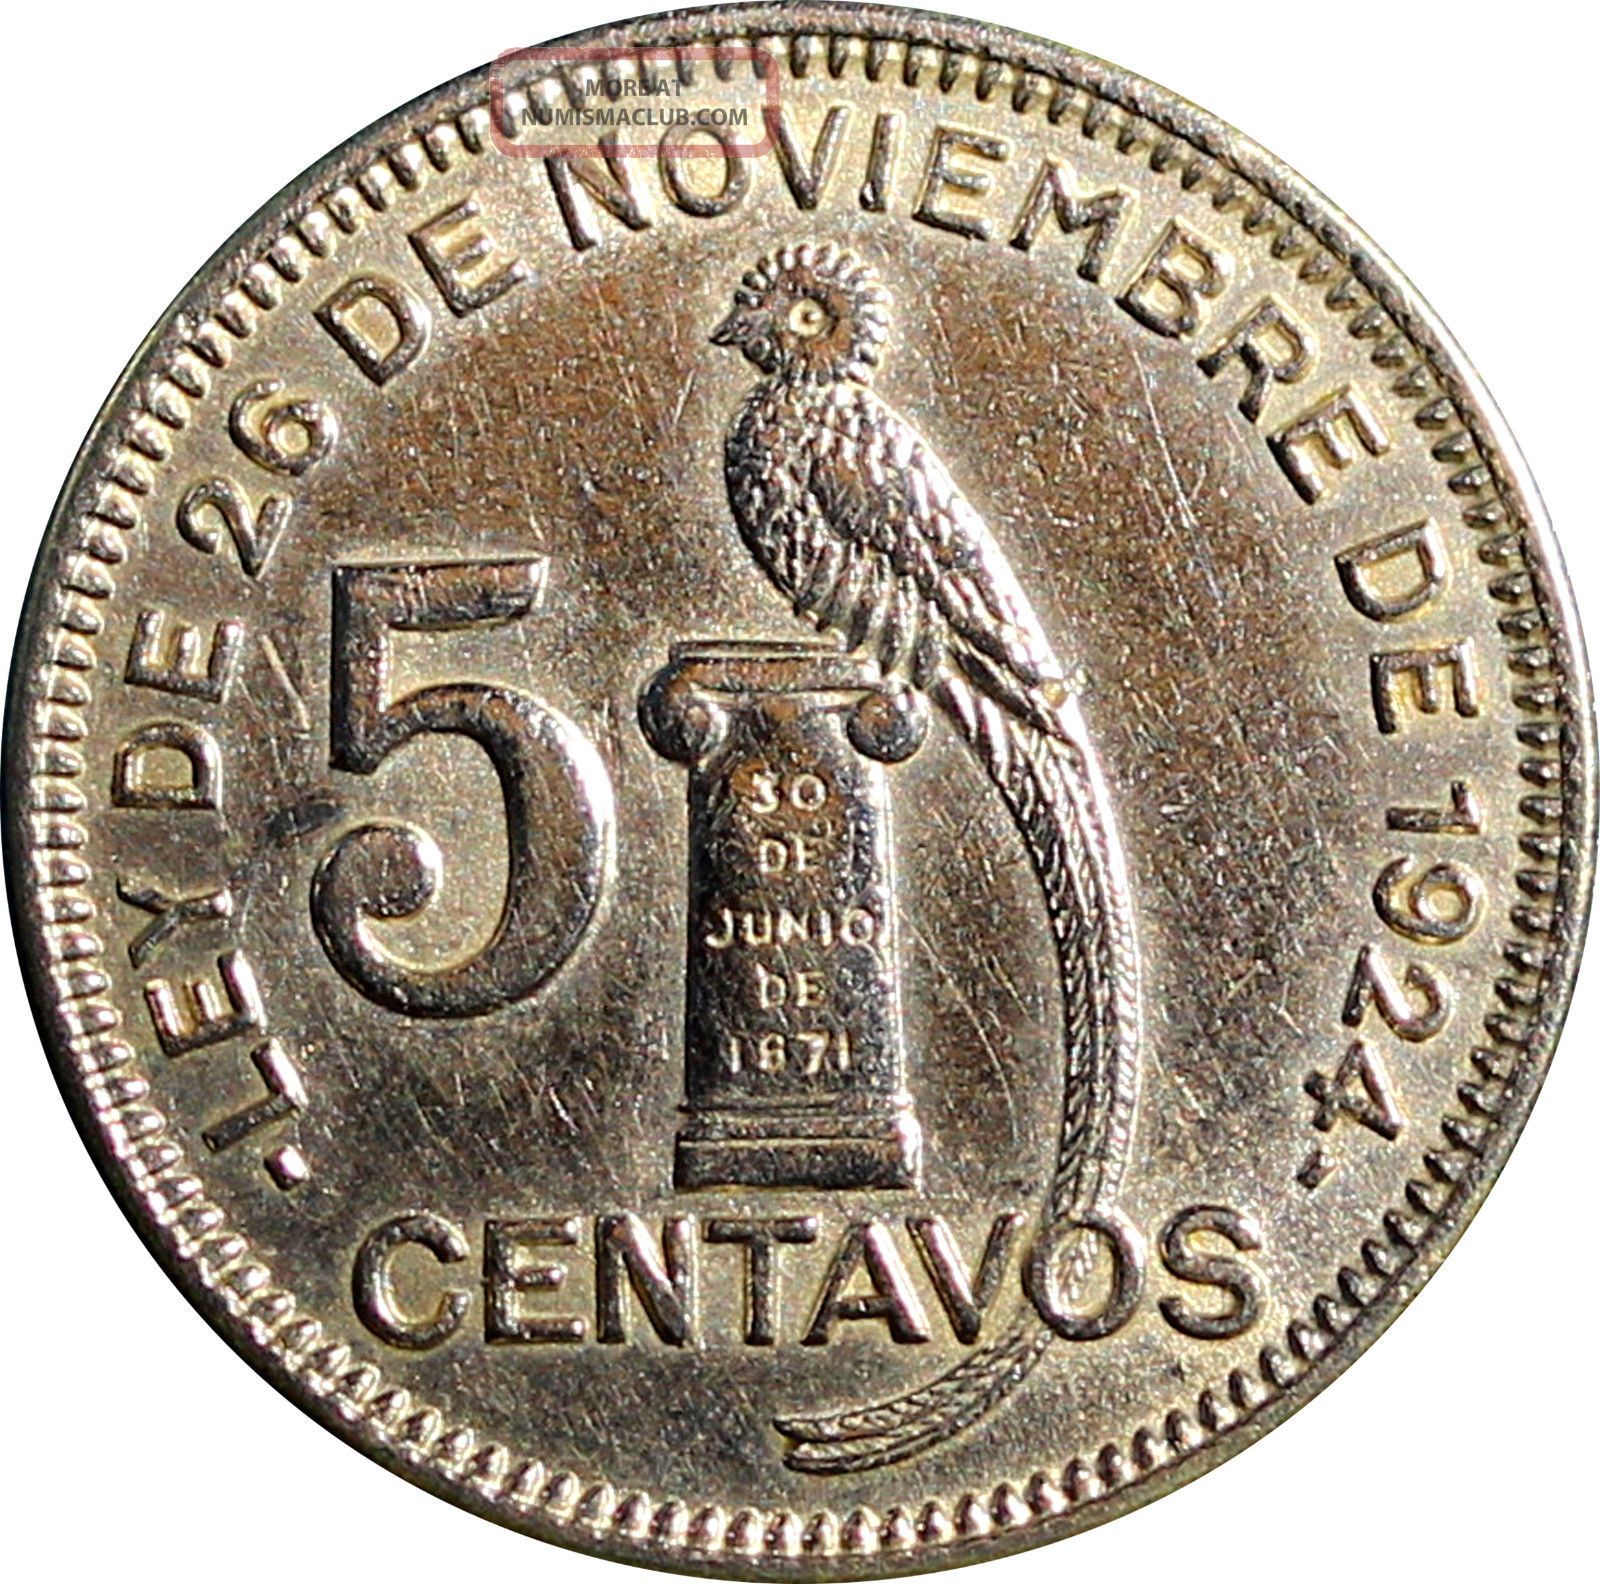 Guatemala Silver 1933 5 Centavos Aunc Low Mintage - 600, 00 Km 238. 2